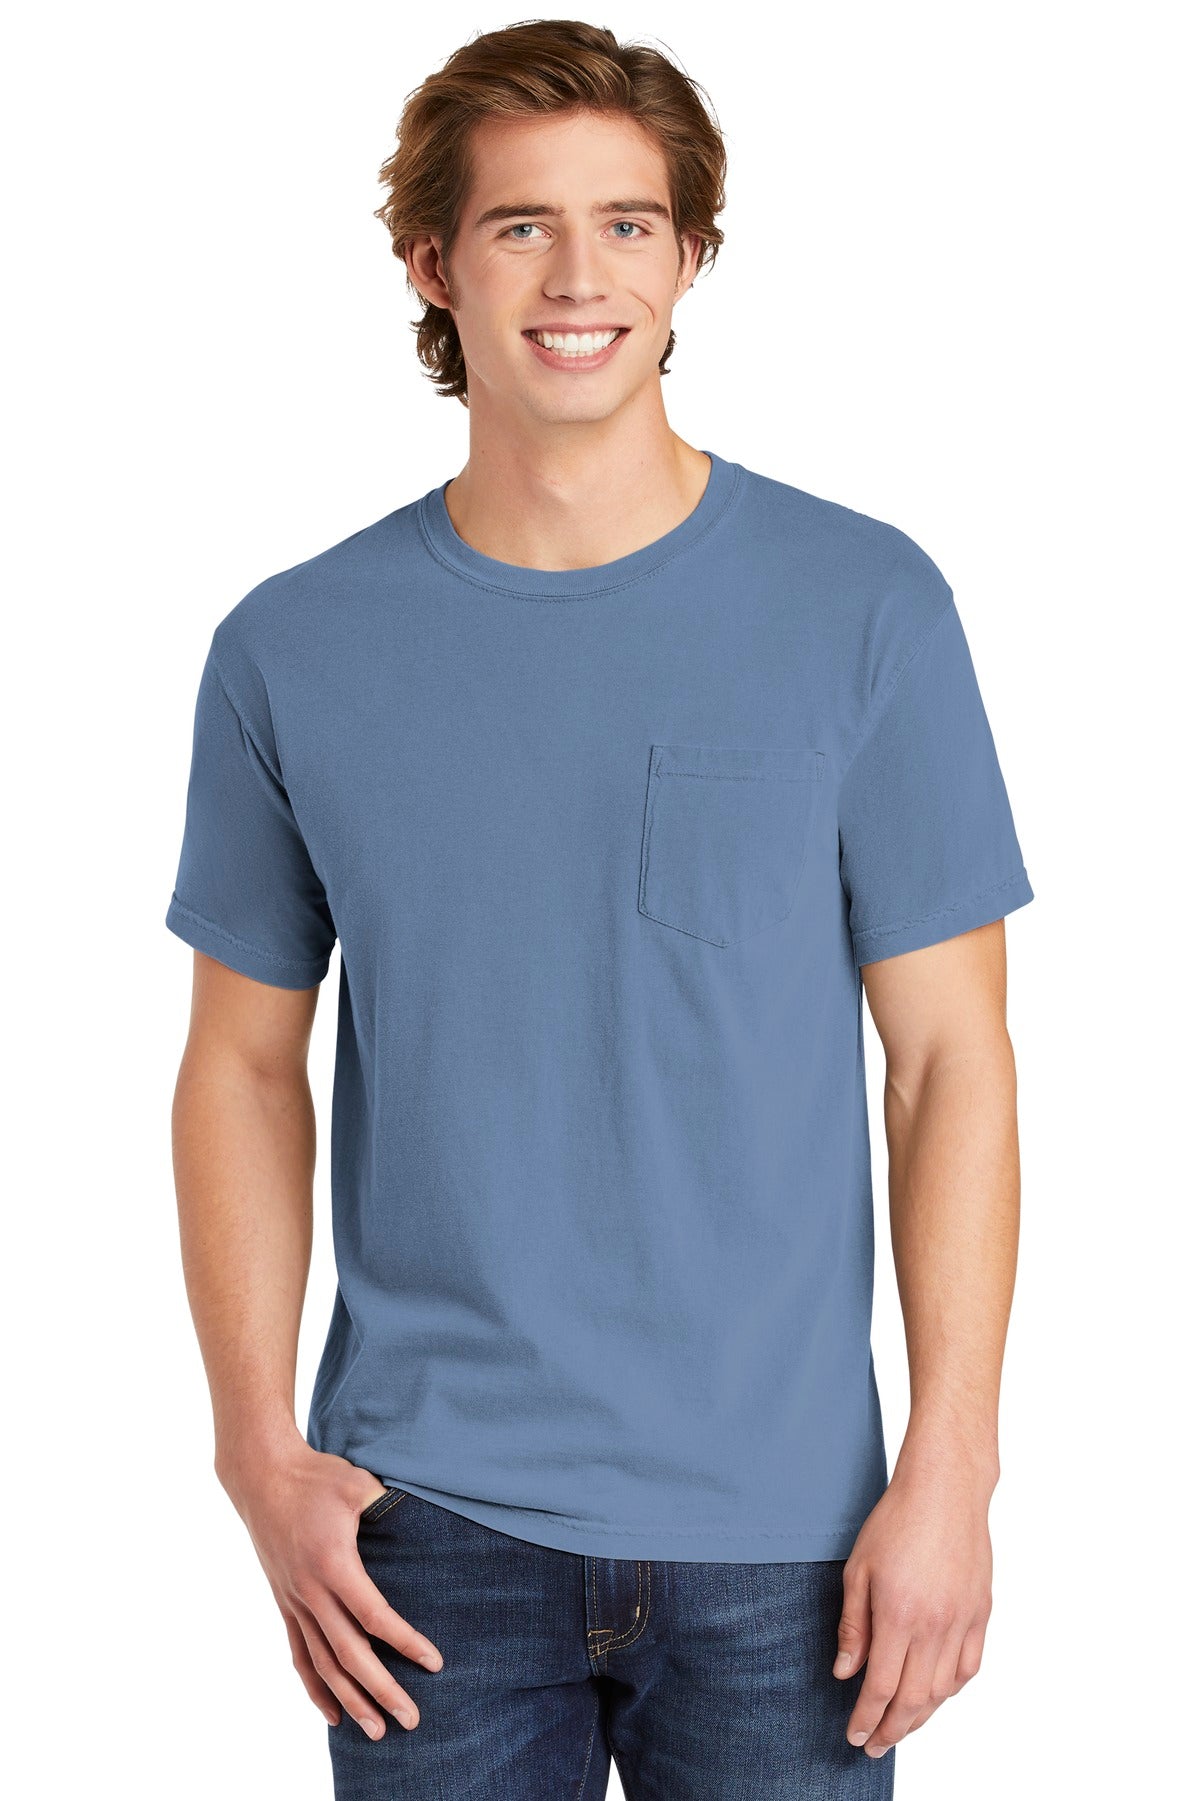 T-Shirts Washed Denim Comfort Colors